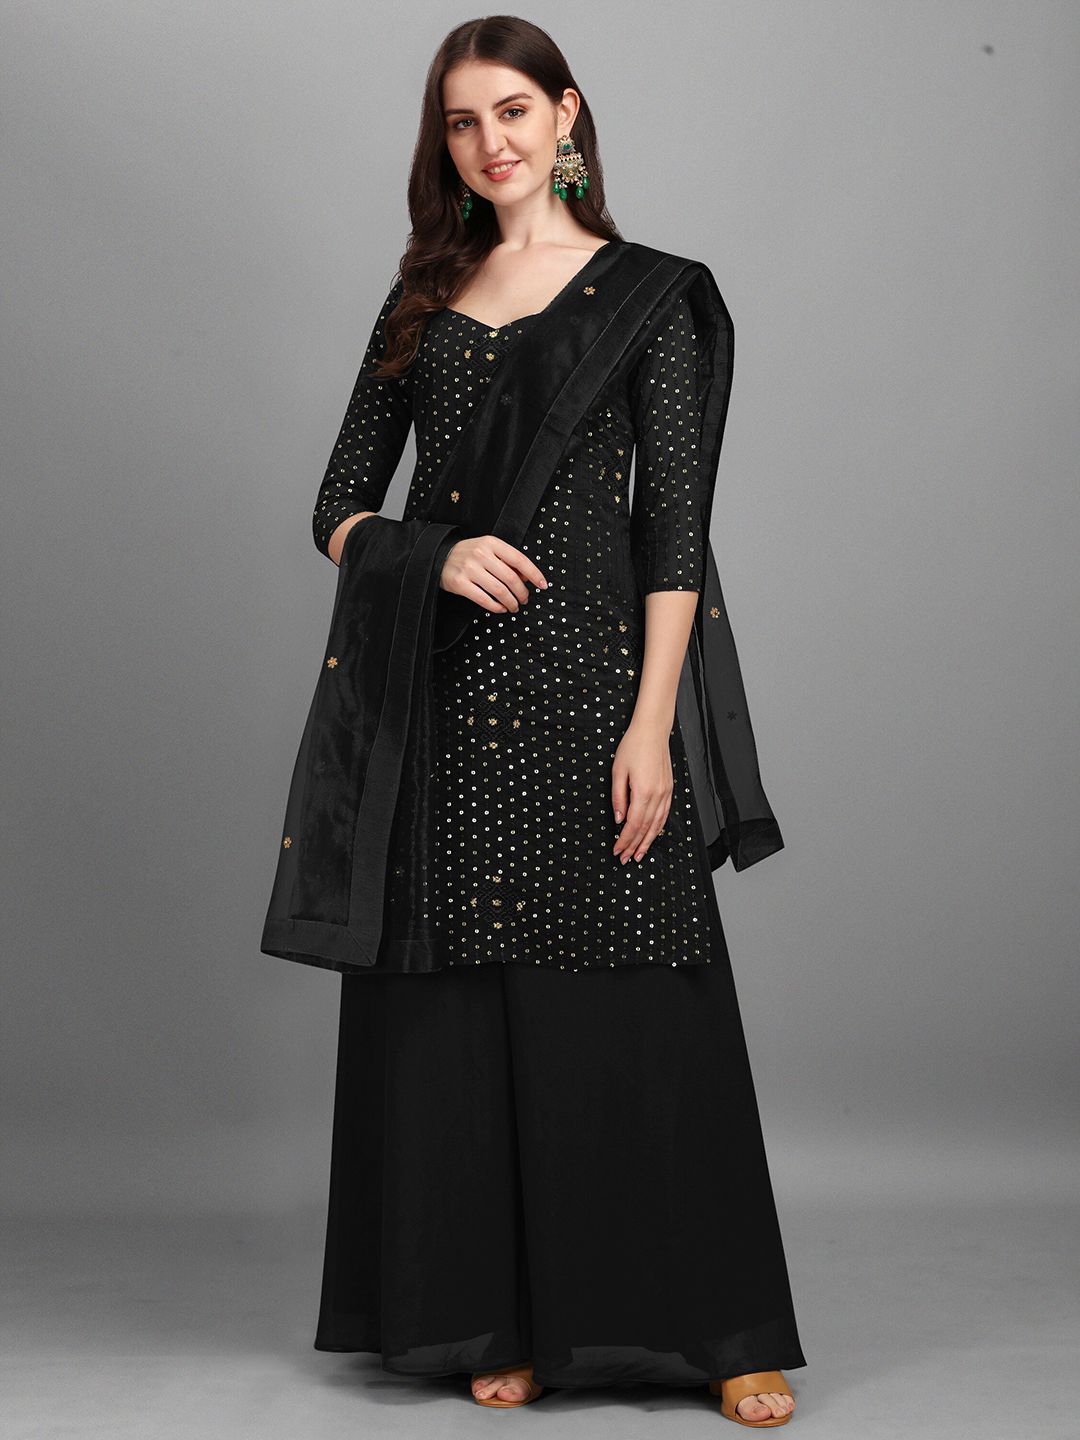 Fashionuma Black Embroidered Semi-Stitched Dress Material Price in India